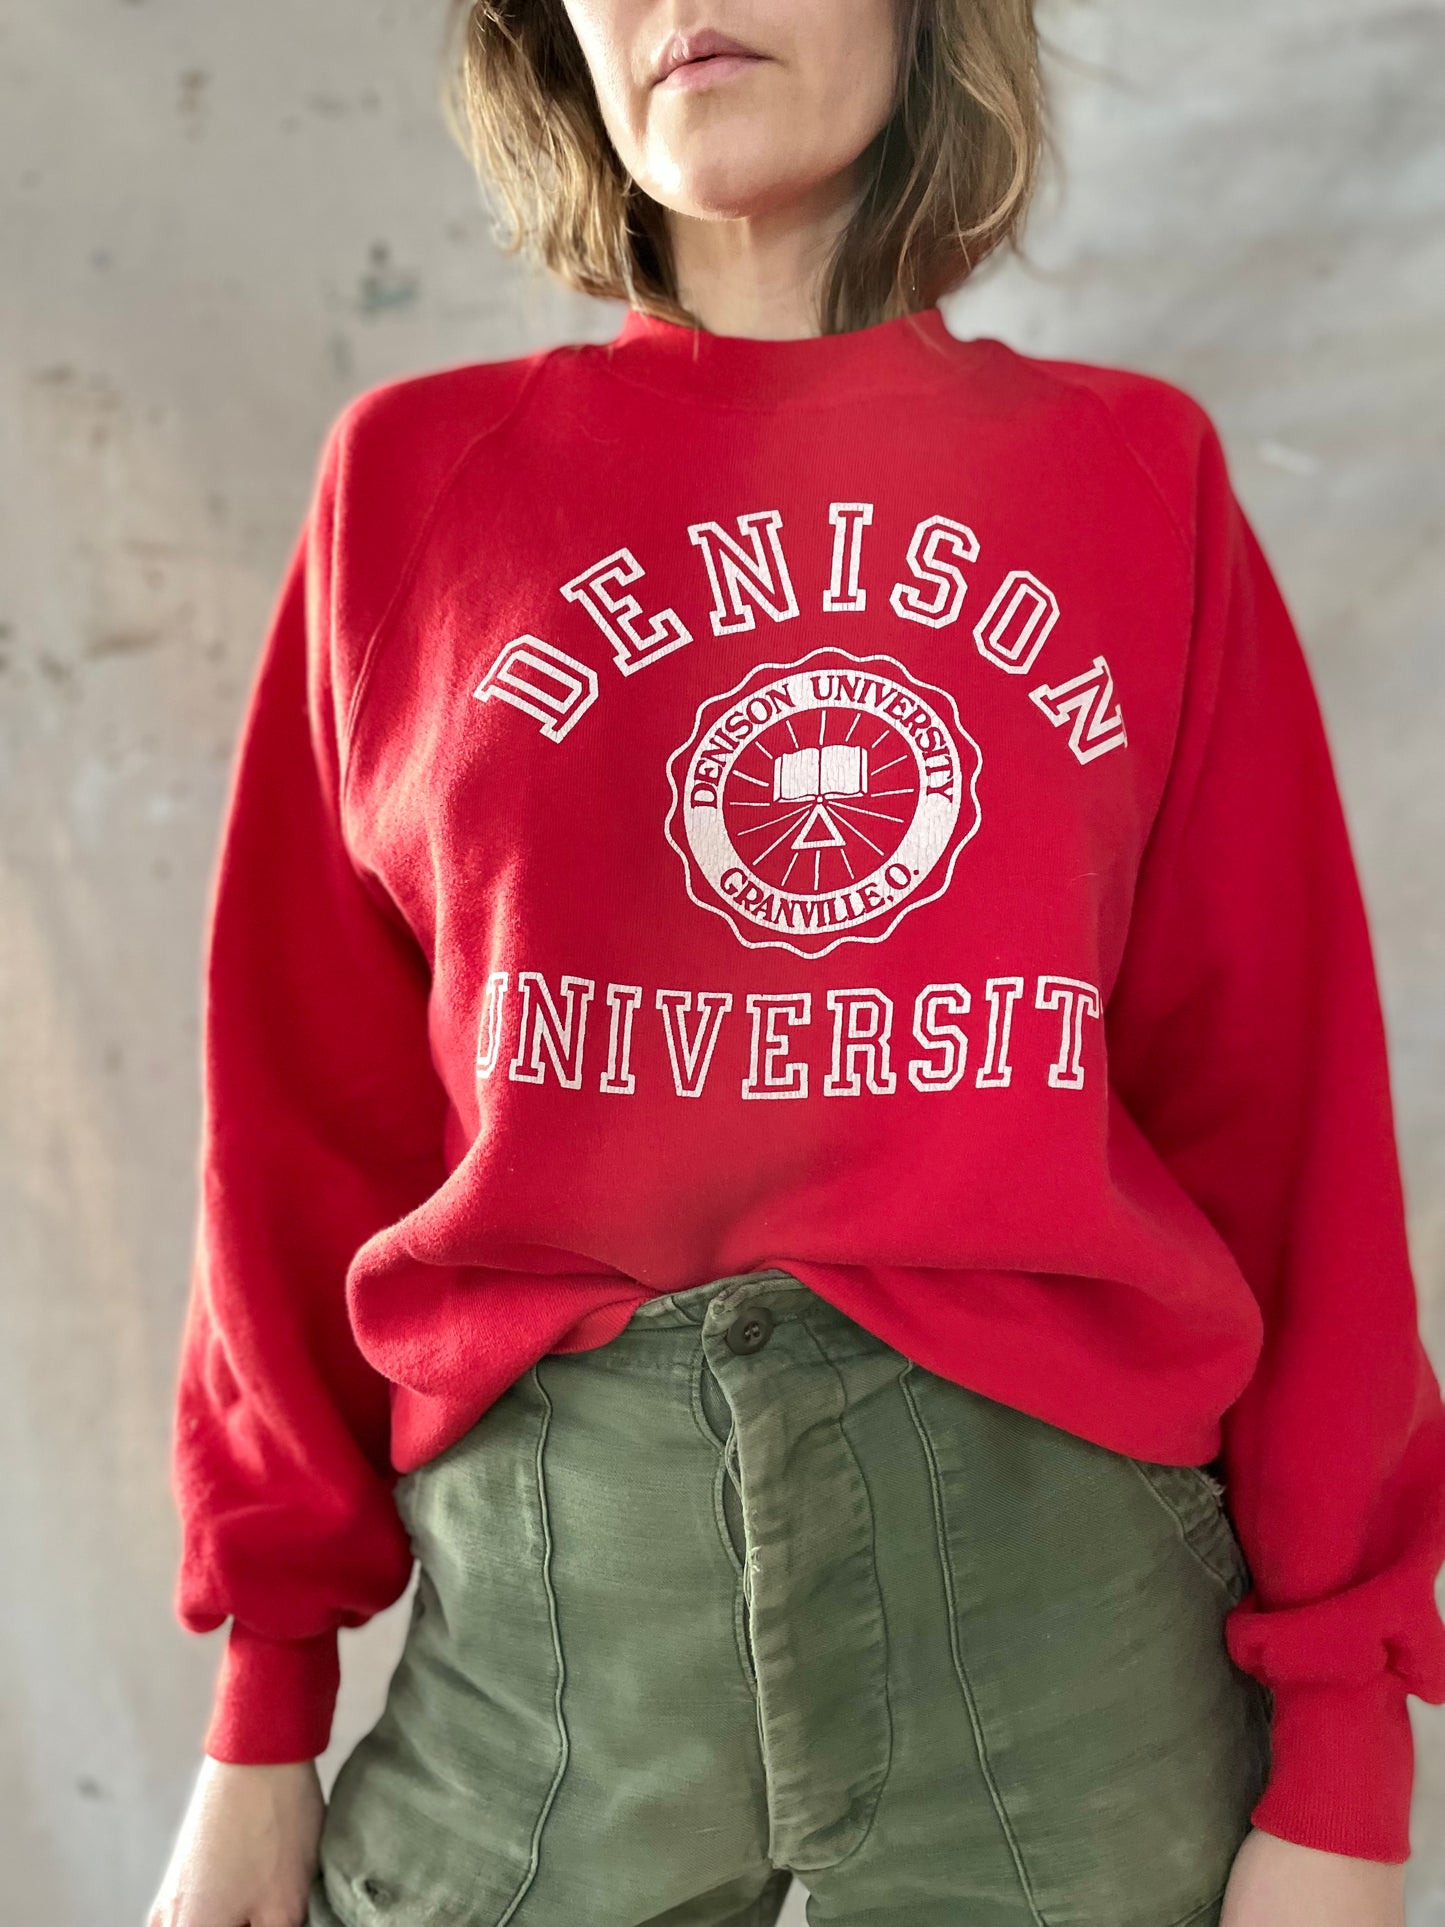 Denison University Sweatshirt